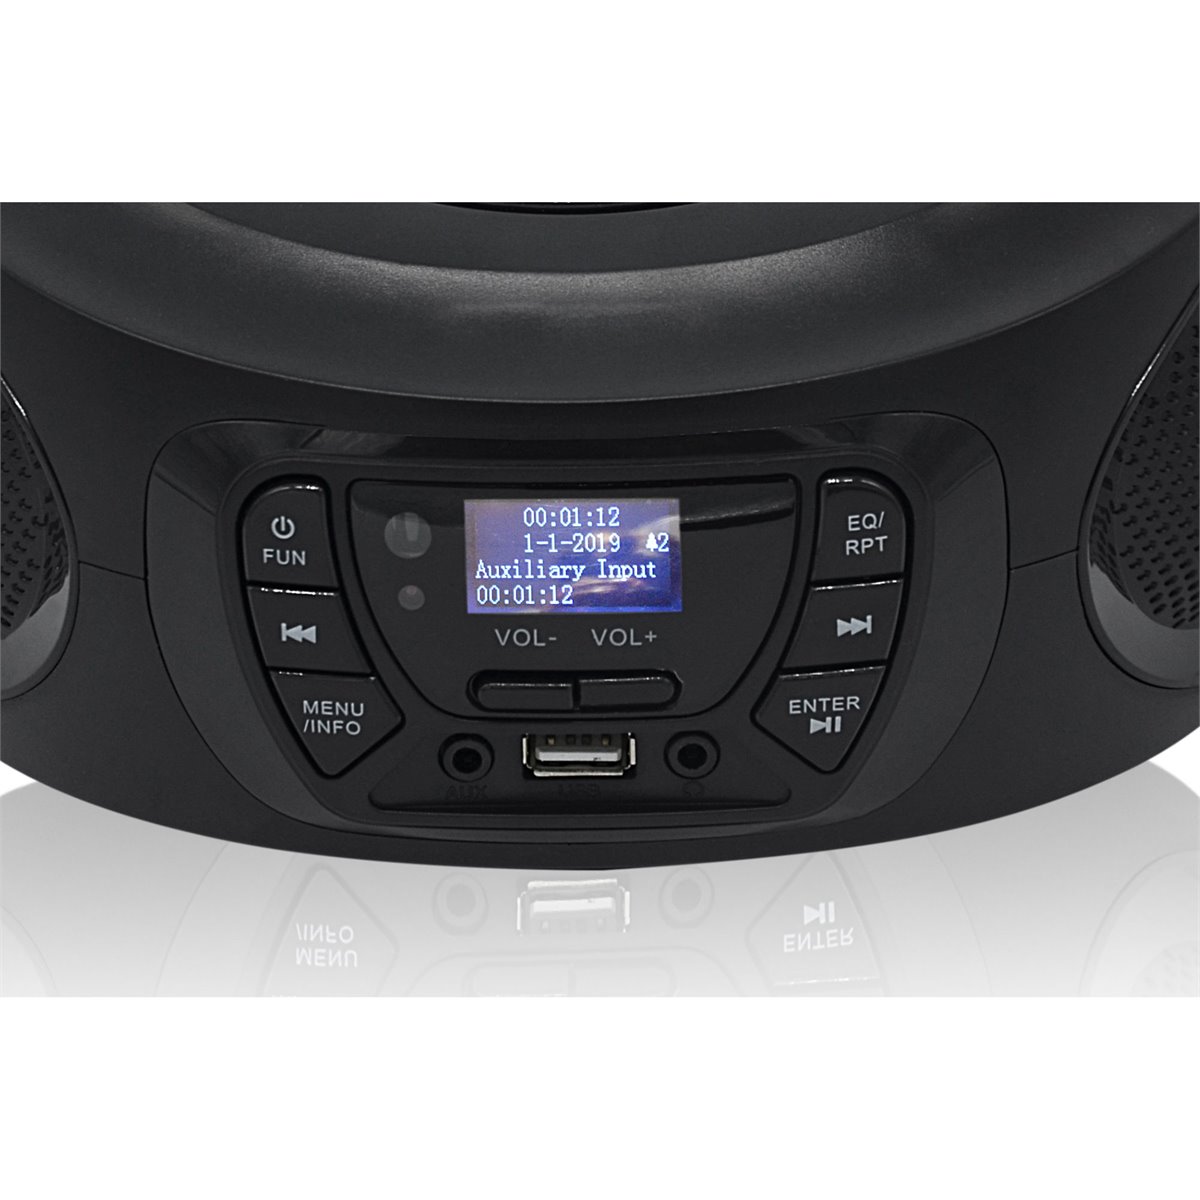 Roadstar CDR-375D+/BK Radio Portátil DAB DAB+ FM, Reproductor CD-MP3, USB,  AUX-IN, Mando a Distancia, Reloj Alarma, , Negro - Conforama